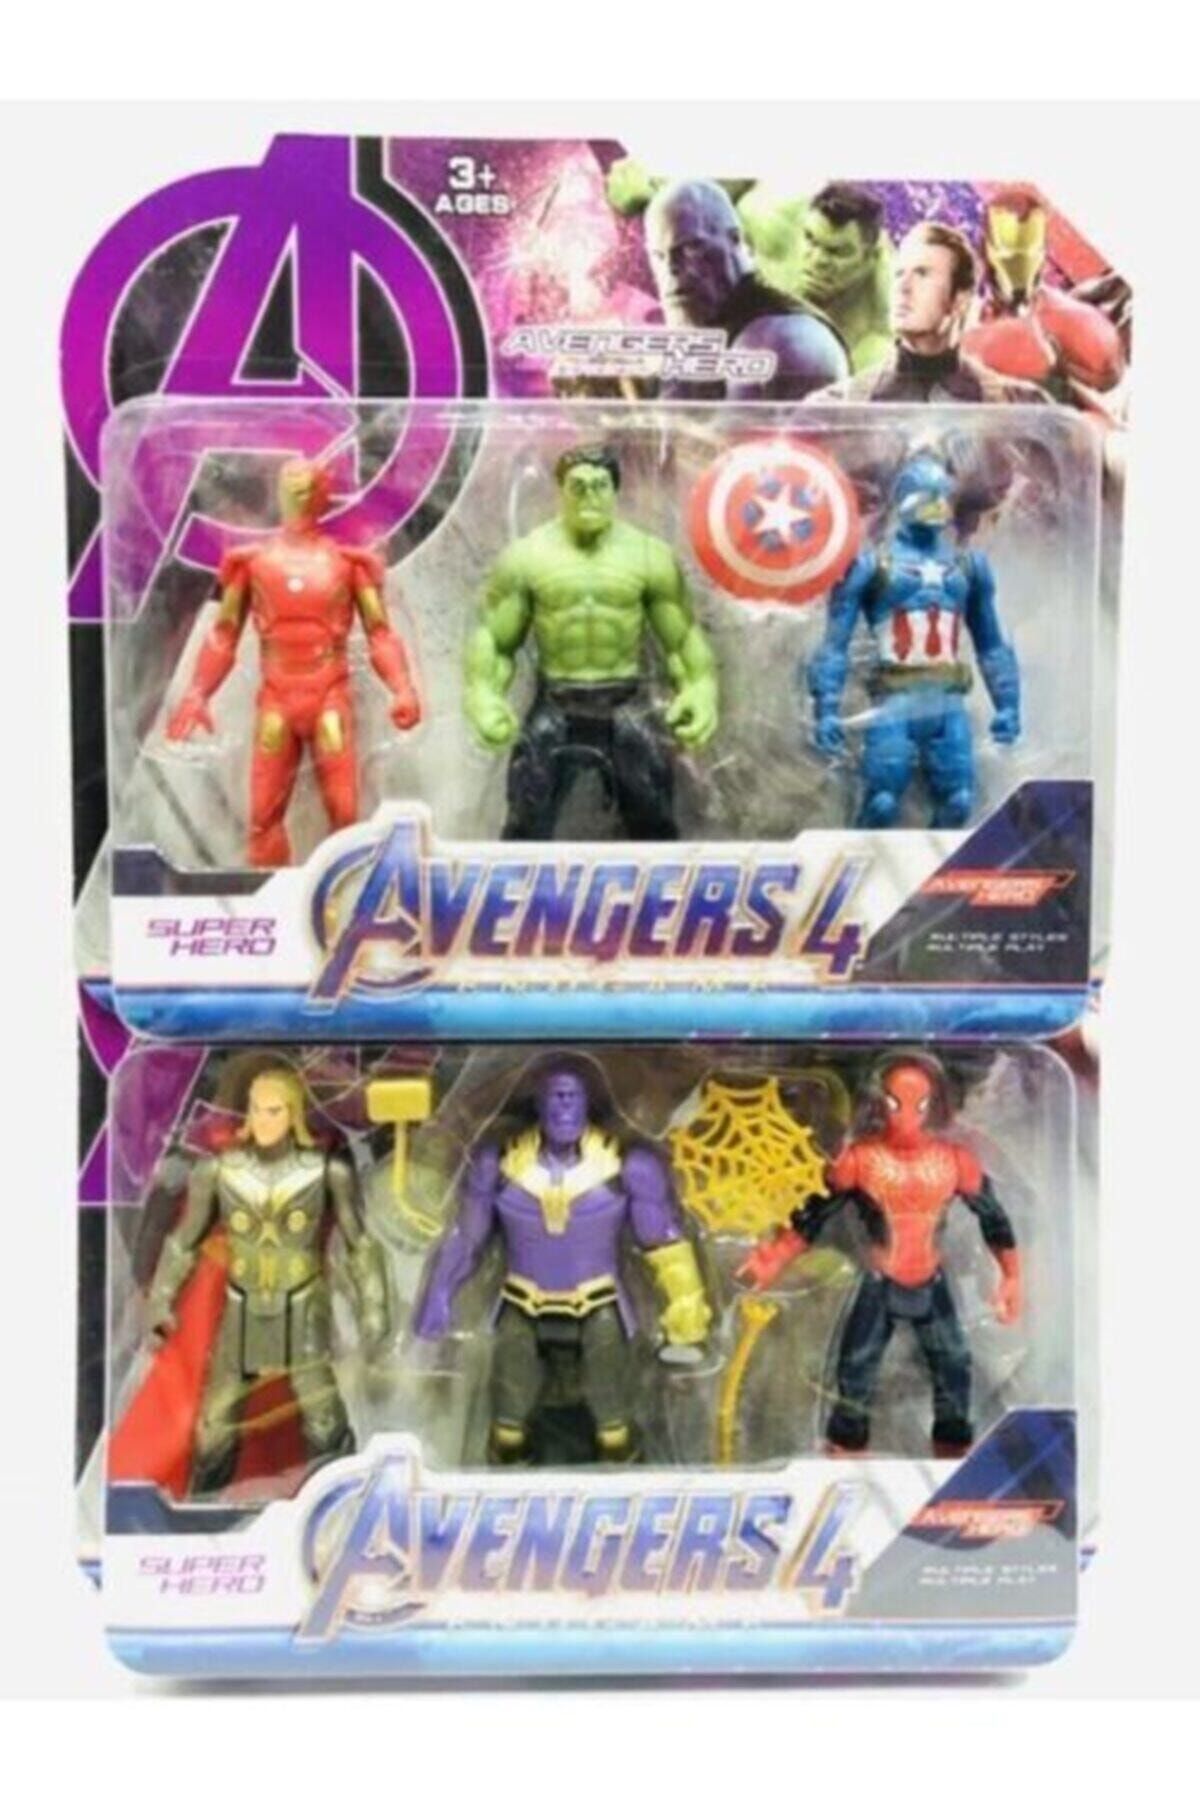 AVENGERS Thanos Hulk Spiderman Thor Ironman Captan Amerika Figür Oyuncak 6 Adet 11.5 cm